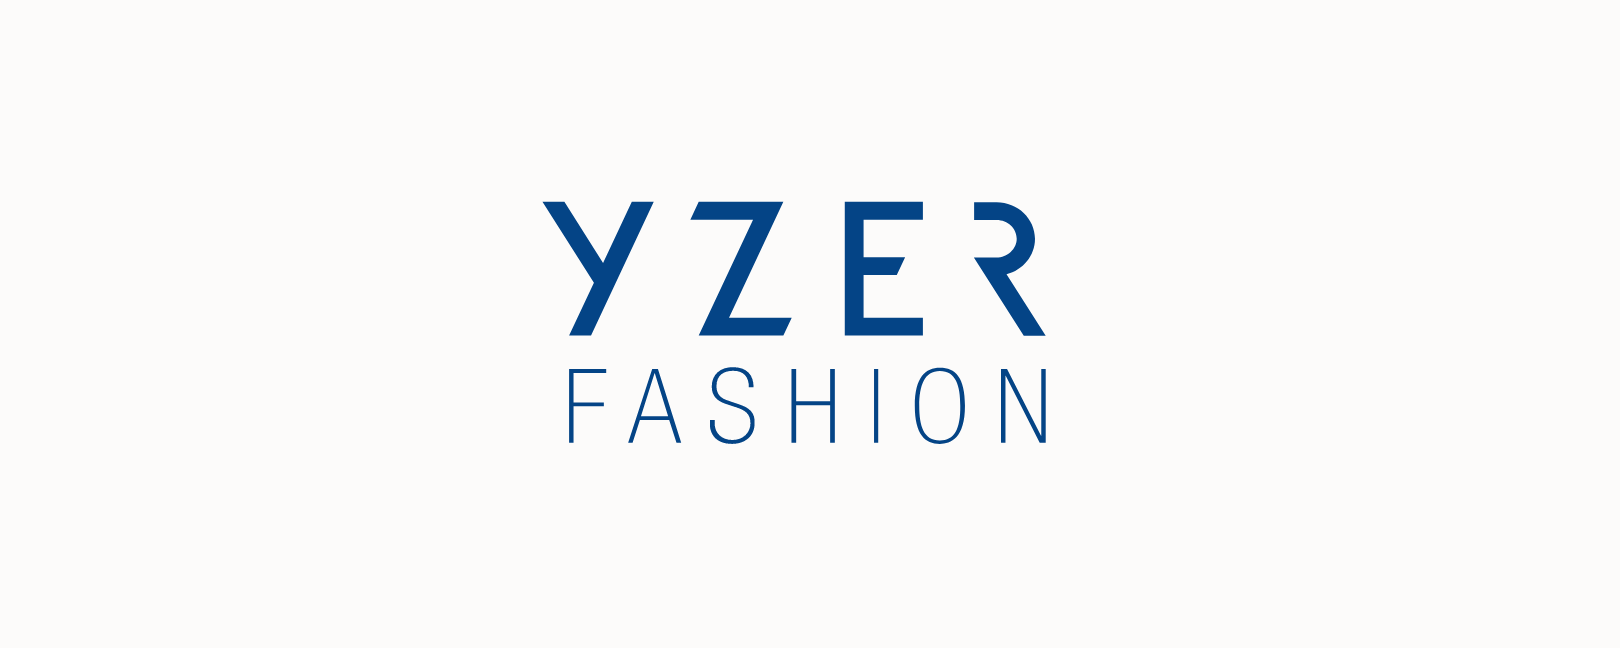 Size does matter, maar niet bij Yzer Fashion